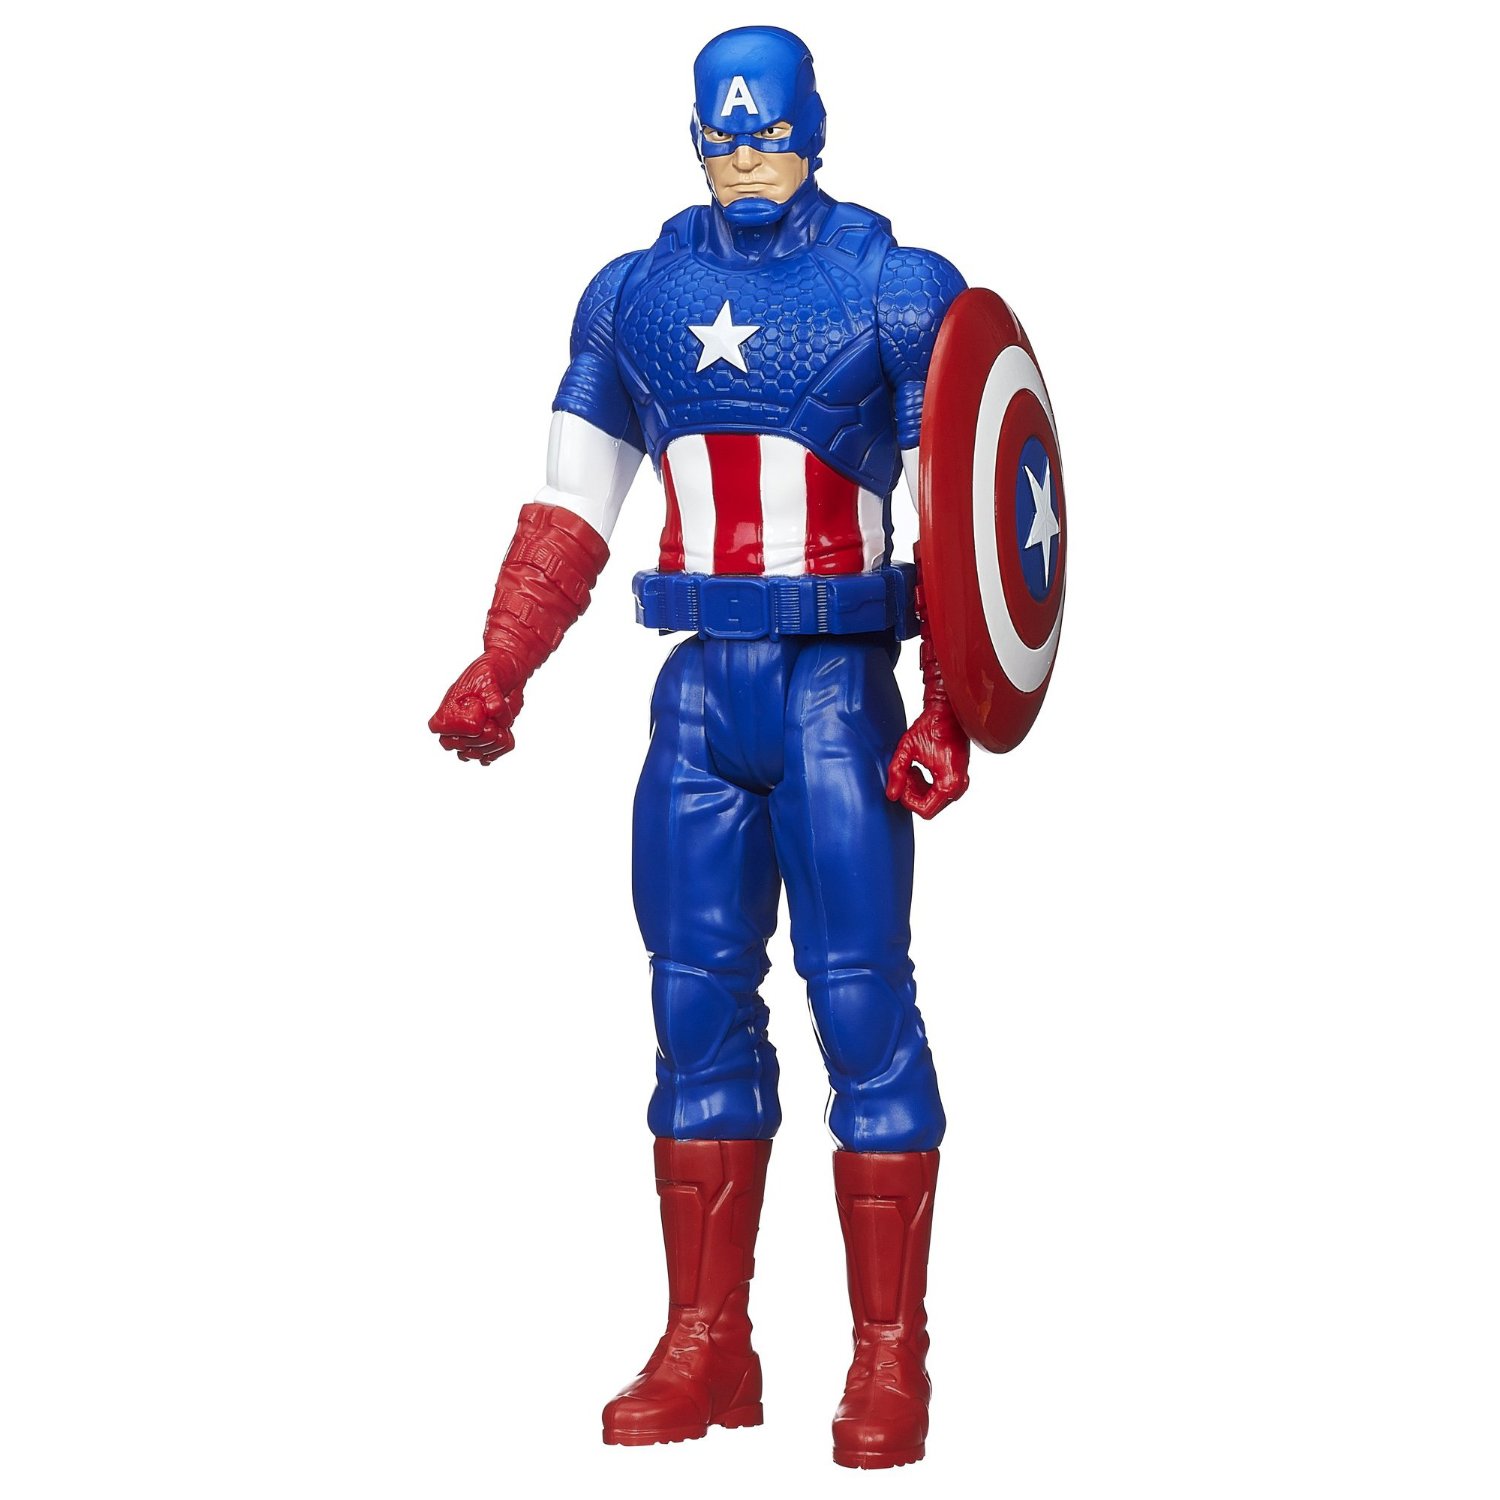 Captain America 12-Inch Figure